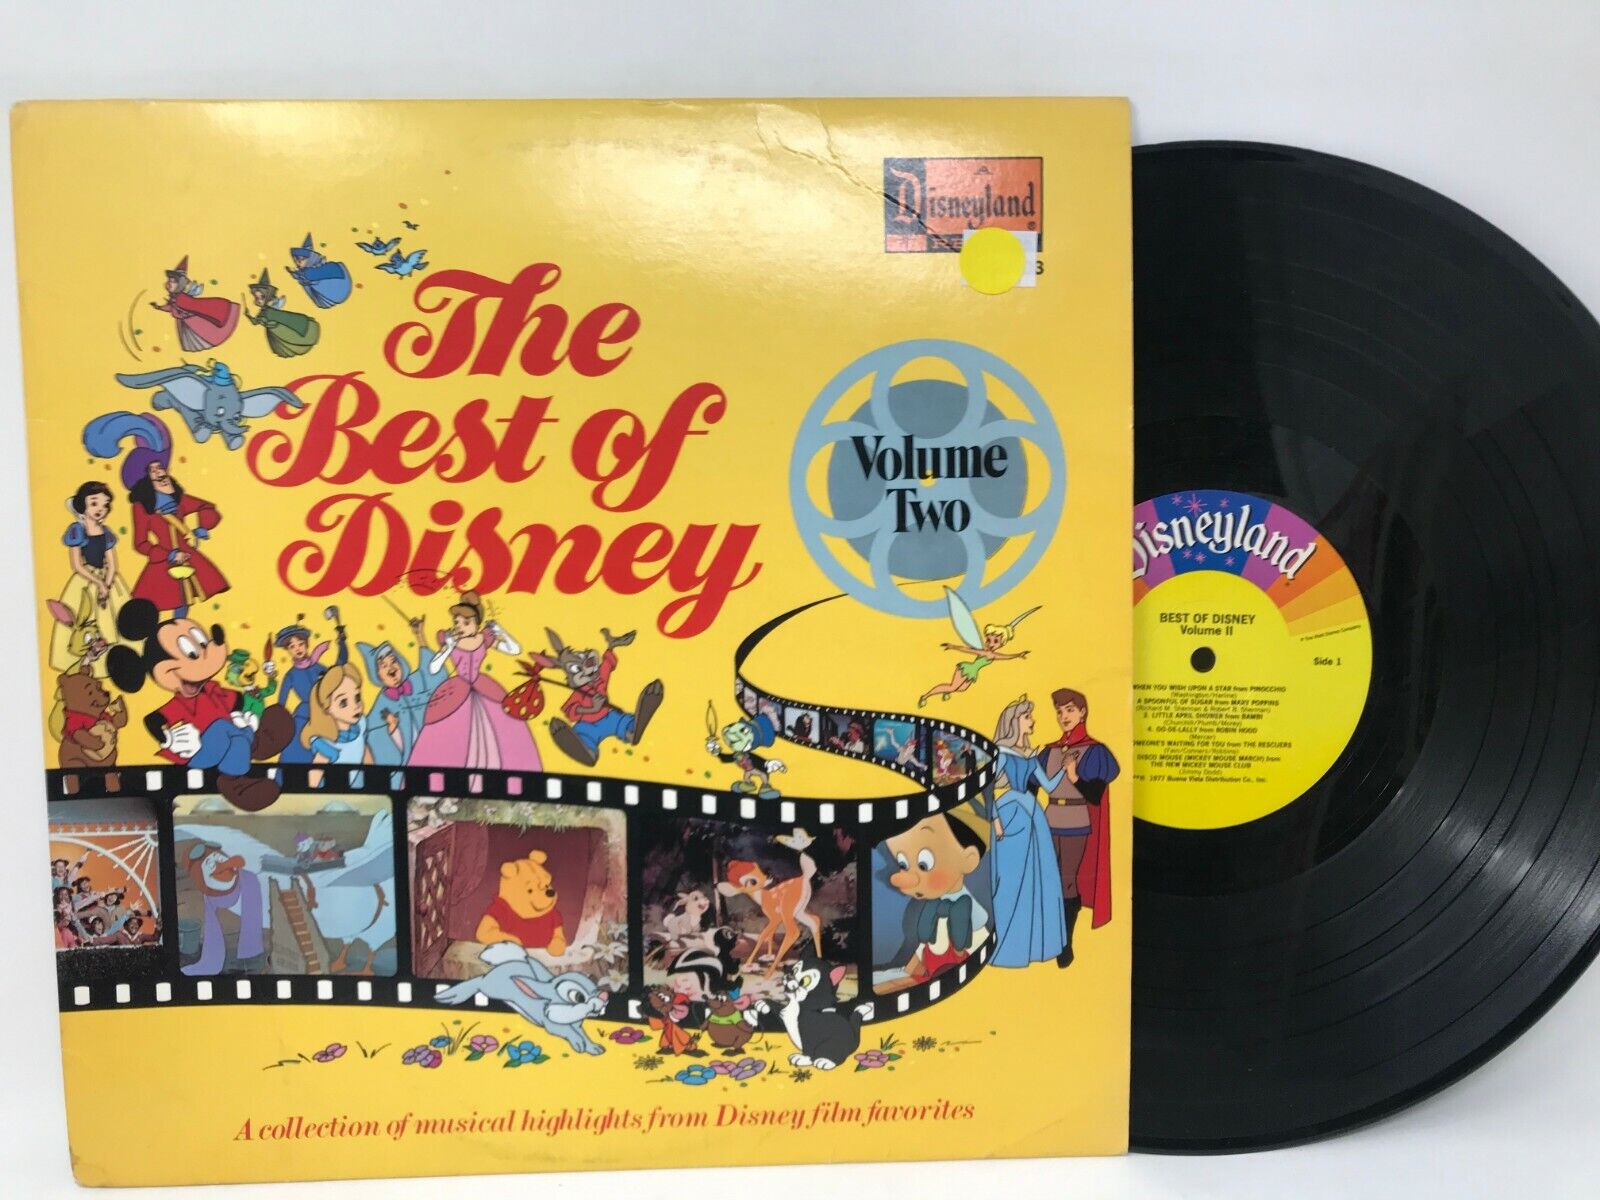 The Best Of Disney Volume Two LP Vinyl Record - Original 1978 Pressing 